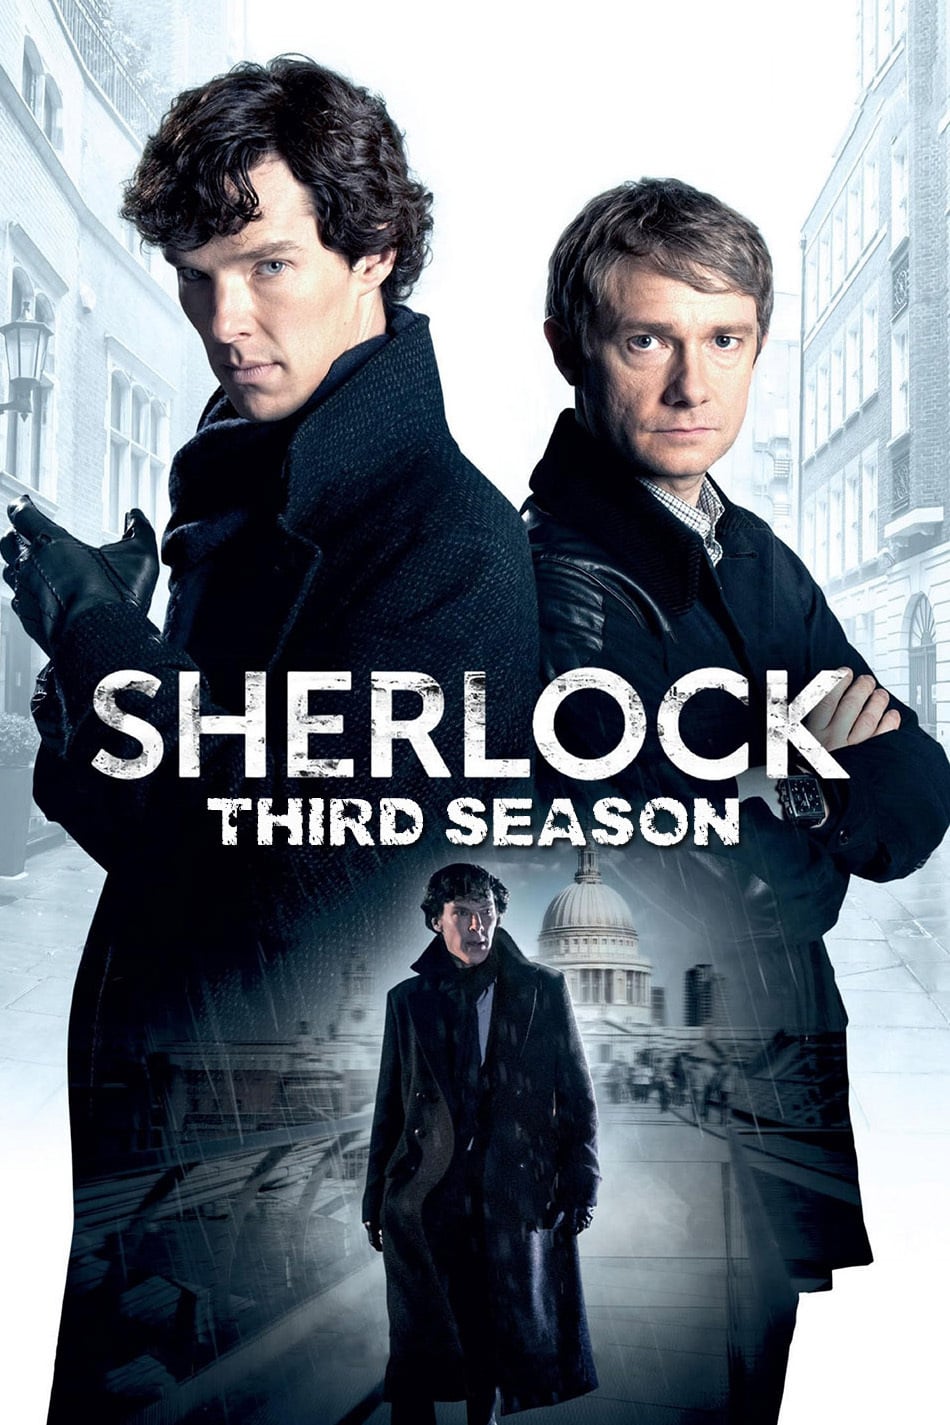 Sherlock Holmes Film Stream